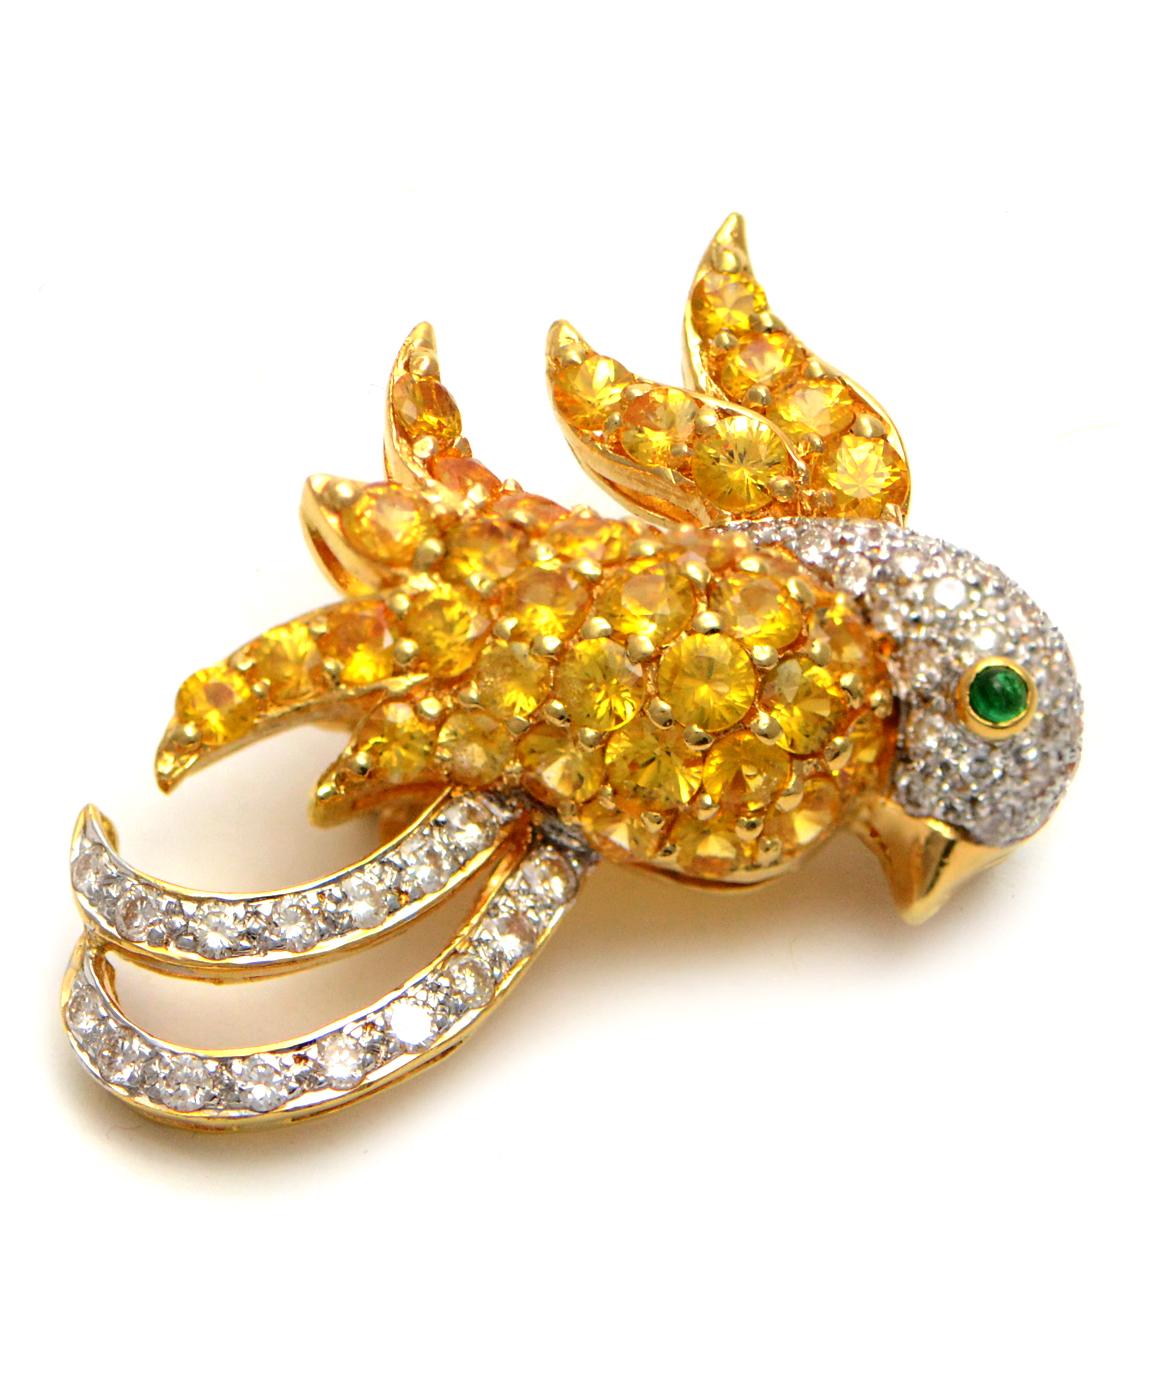 Solid 18K Yellow Gold Bird Brooch with Genuine Diamonds, Citrine & Emerald 10.1g 2